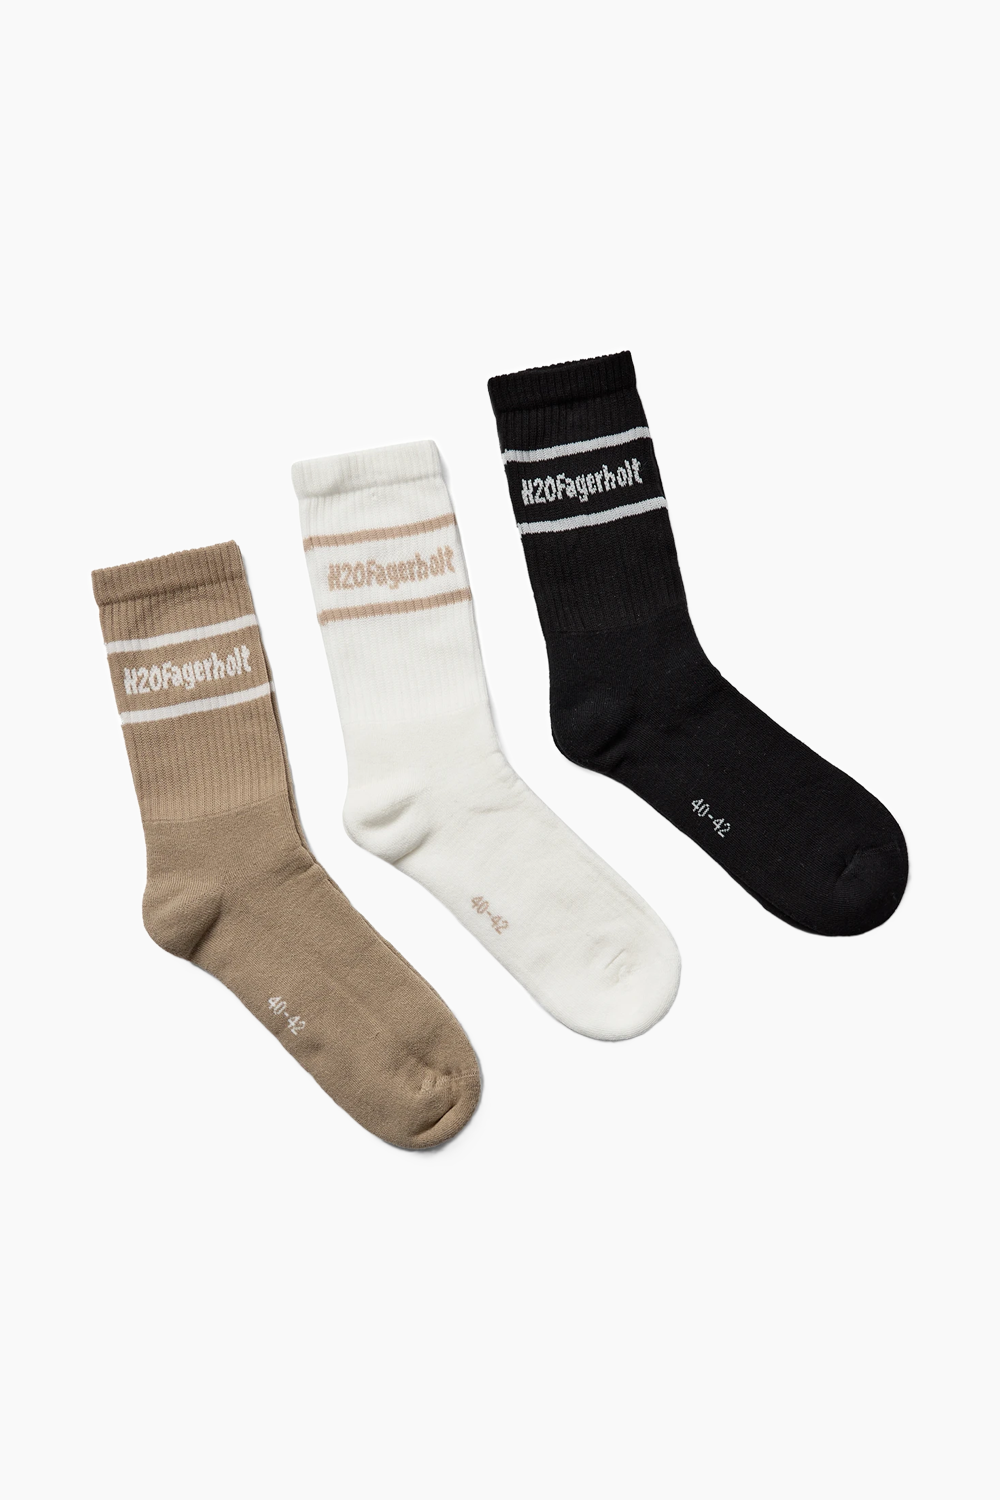 New Suck Socks - Black/White/Creamy Grey - H2O Fagerholt